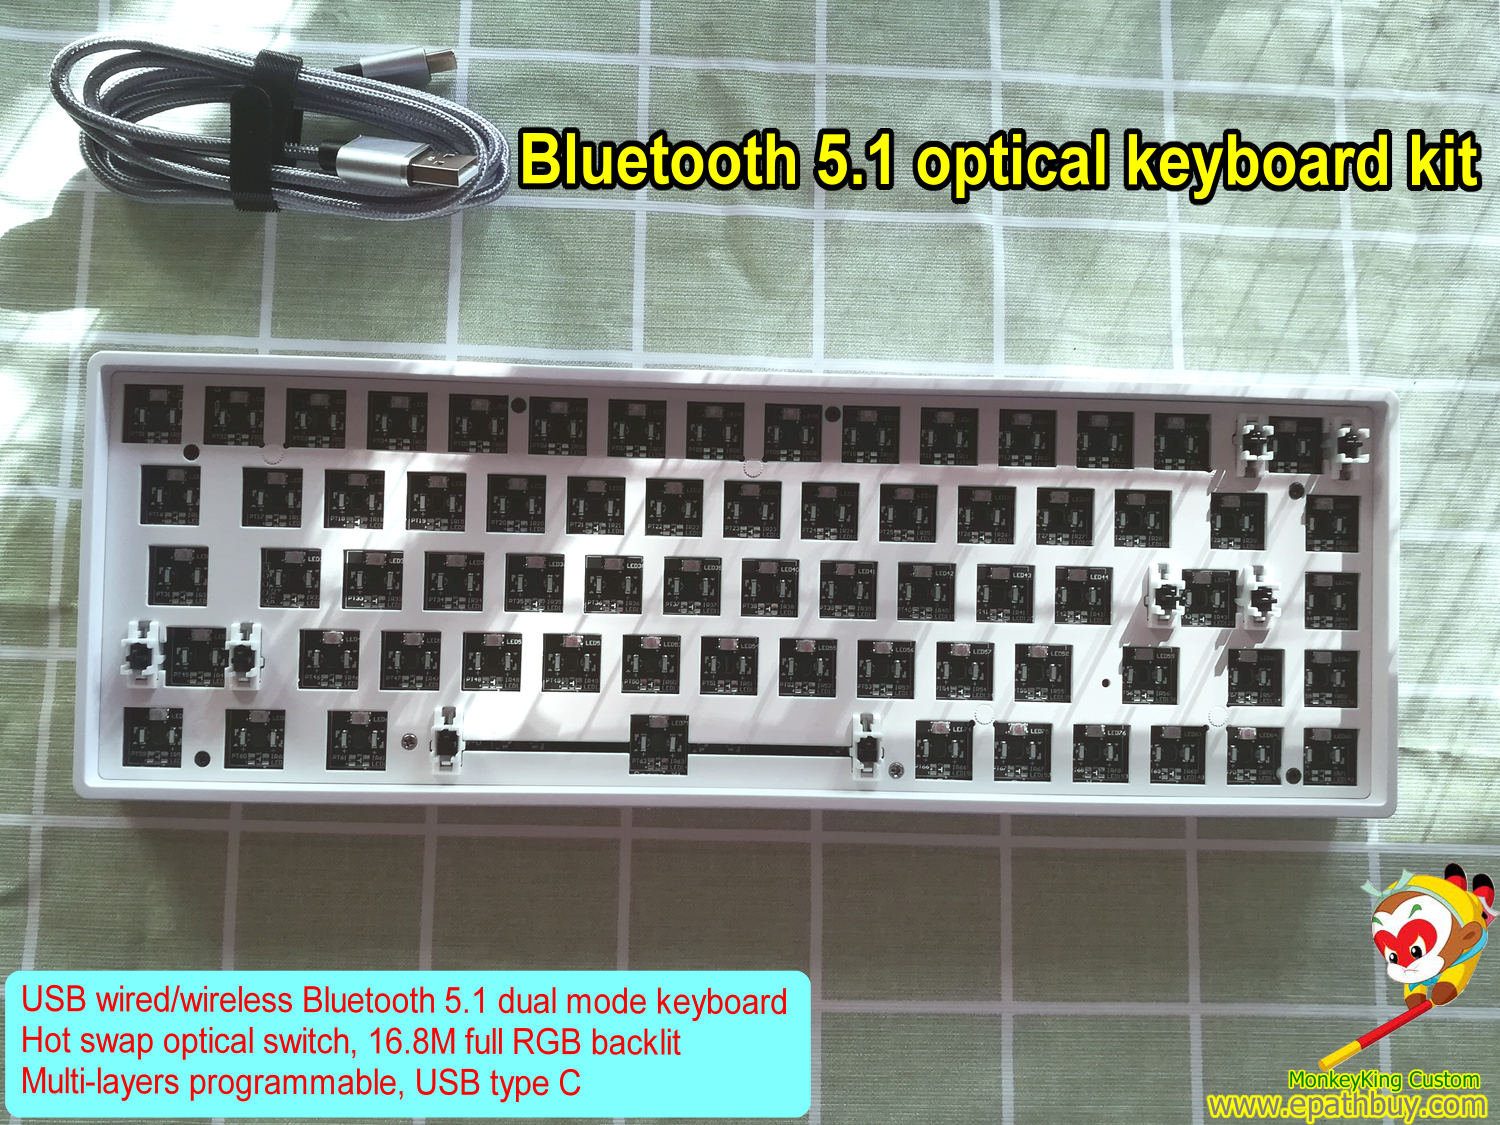 68 keys custom wireless optical keyboard kit: Bluetooth 5.1 / USB wired  dual mode mechanical keyboard barebone kit - iSK68s-bt kit6